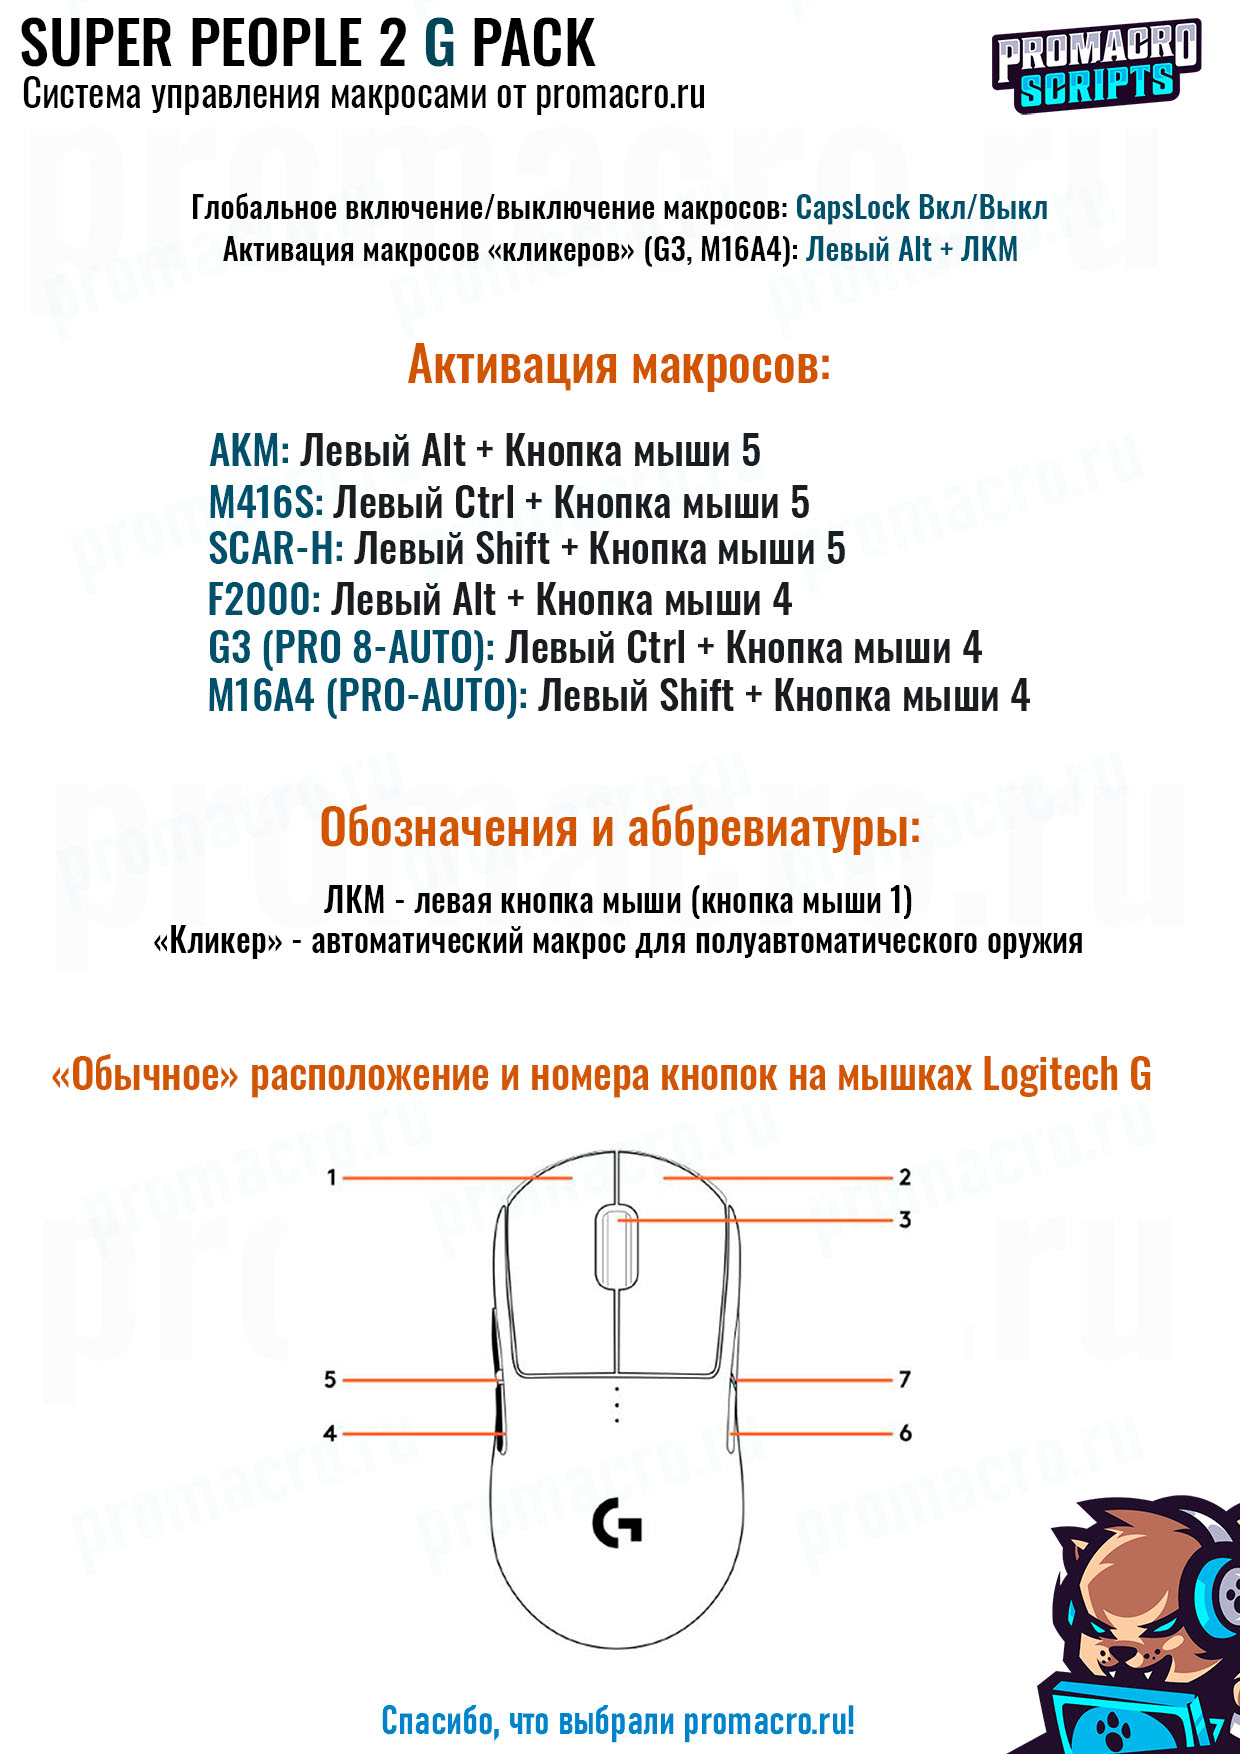 Инструкция по переключения макросов Logitech G в формате G Pack для SUPER PEOPLE 2 от promacro.ru